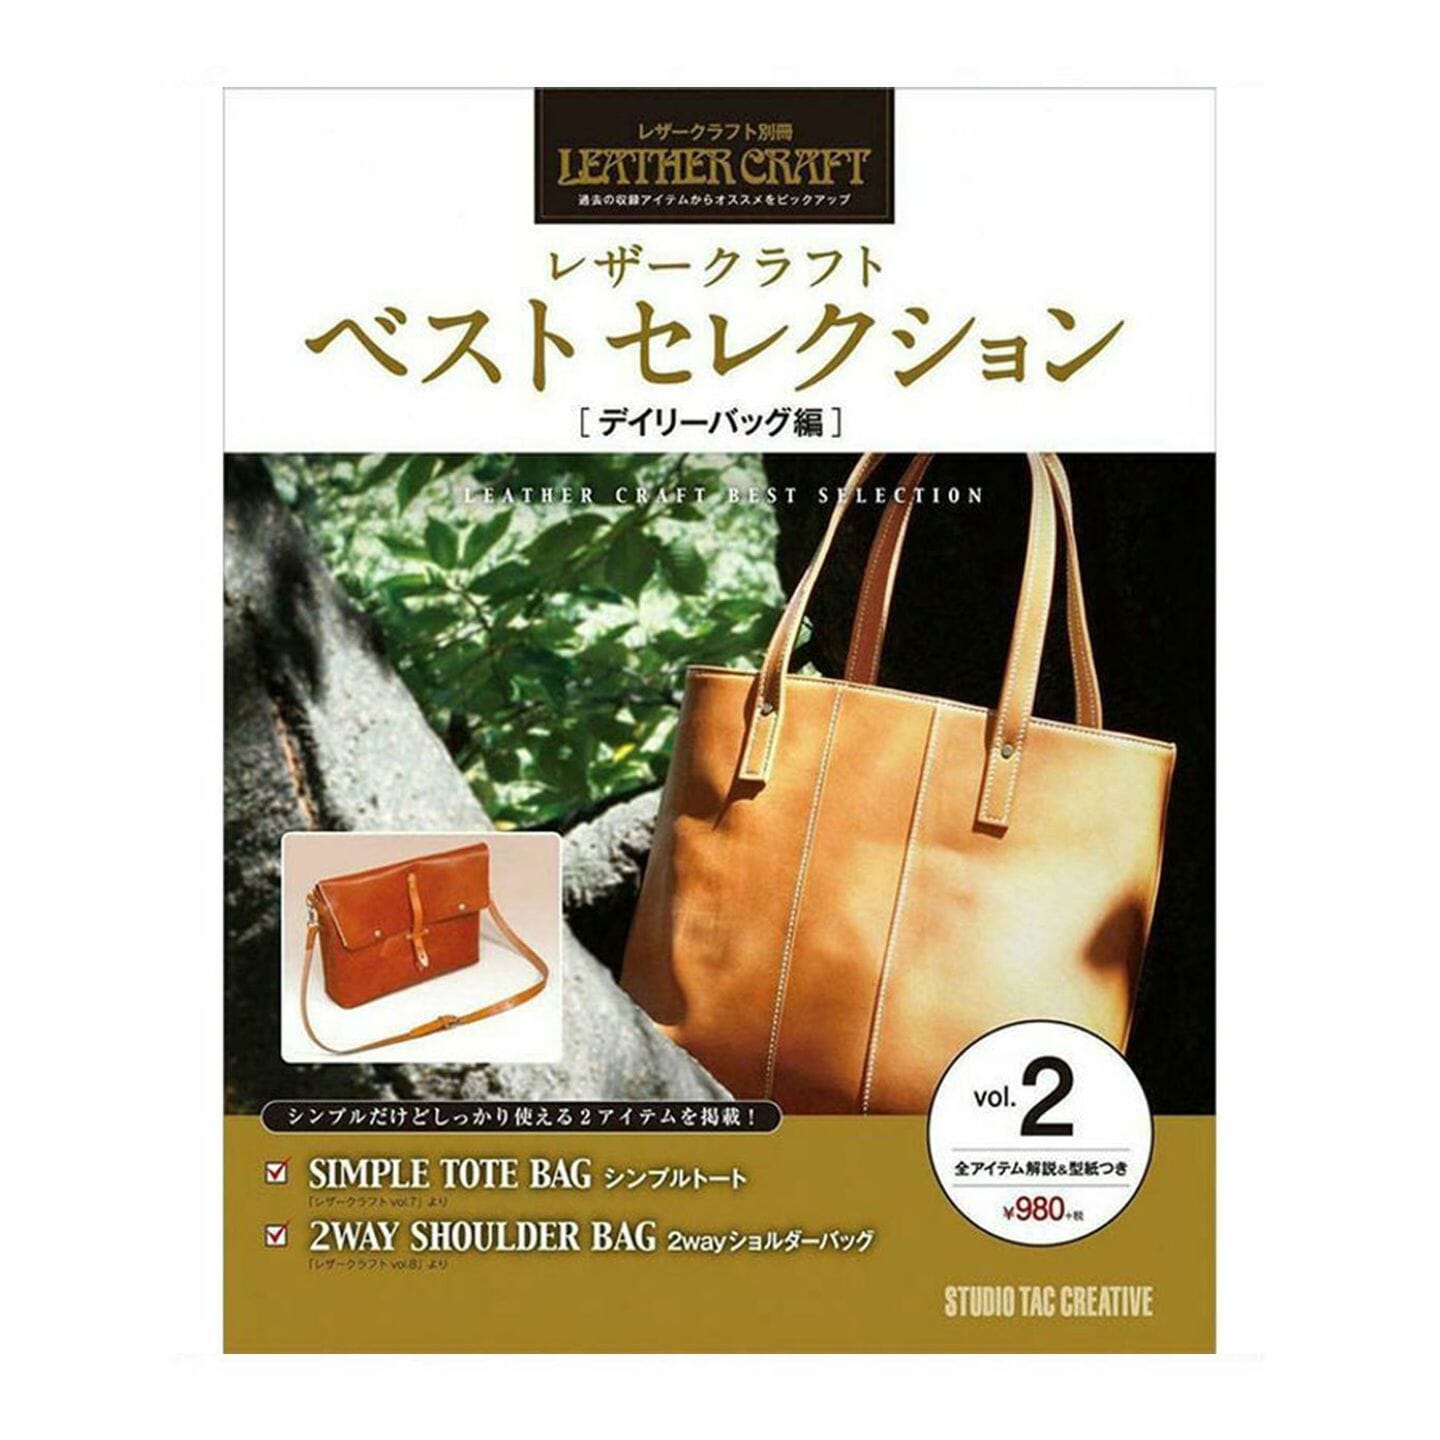 Studio Tac Leather Craft Best Selection Vol.2 Japanese